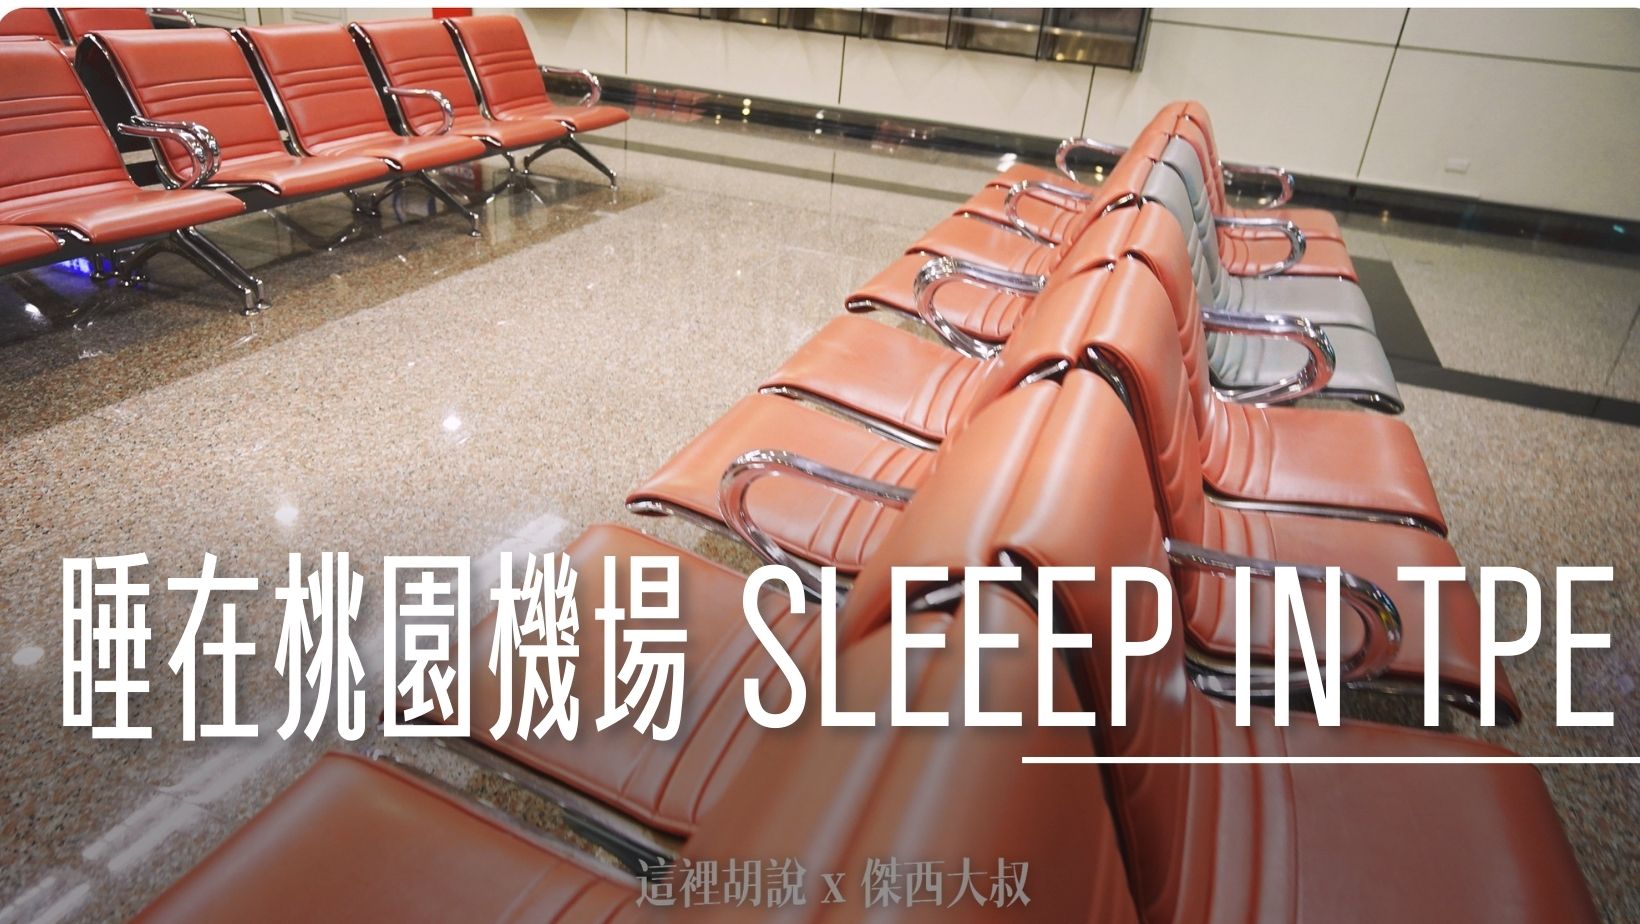 2023,REST IN AIRPORT,SLEEP IN AIRPORT,SLEEP IN TPE,Taiwan Taoyuan International Airport,TAOYUAN Airport,TPE,TPE AIRPORT,休息,免費貴賓室,在桃園機場睡覺,在機場睡,桃園機場住宿,桃園機場精選文章,桃園機場過夜,機場休息,機場住宿,機場過夜,睡在桃園機場,睡在機場,睡在機場系列,等飛機,開櫃時間 @傑西大叔 x 這裡胡說